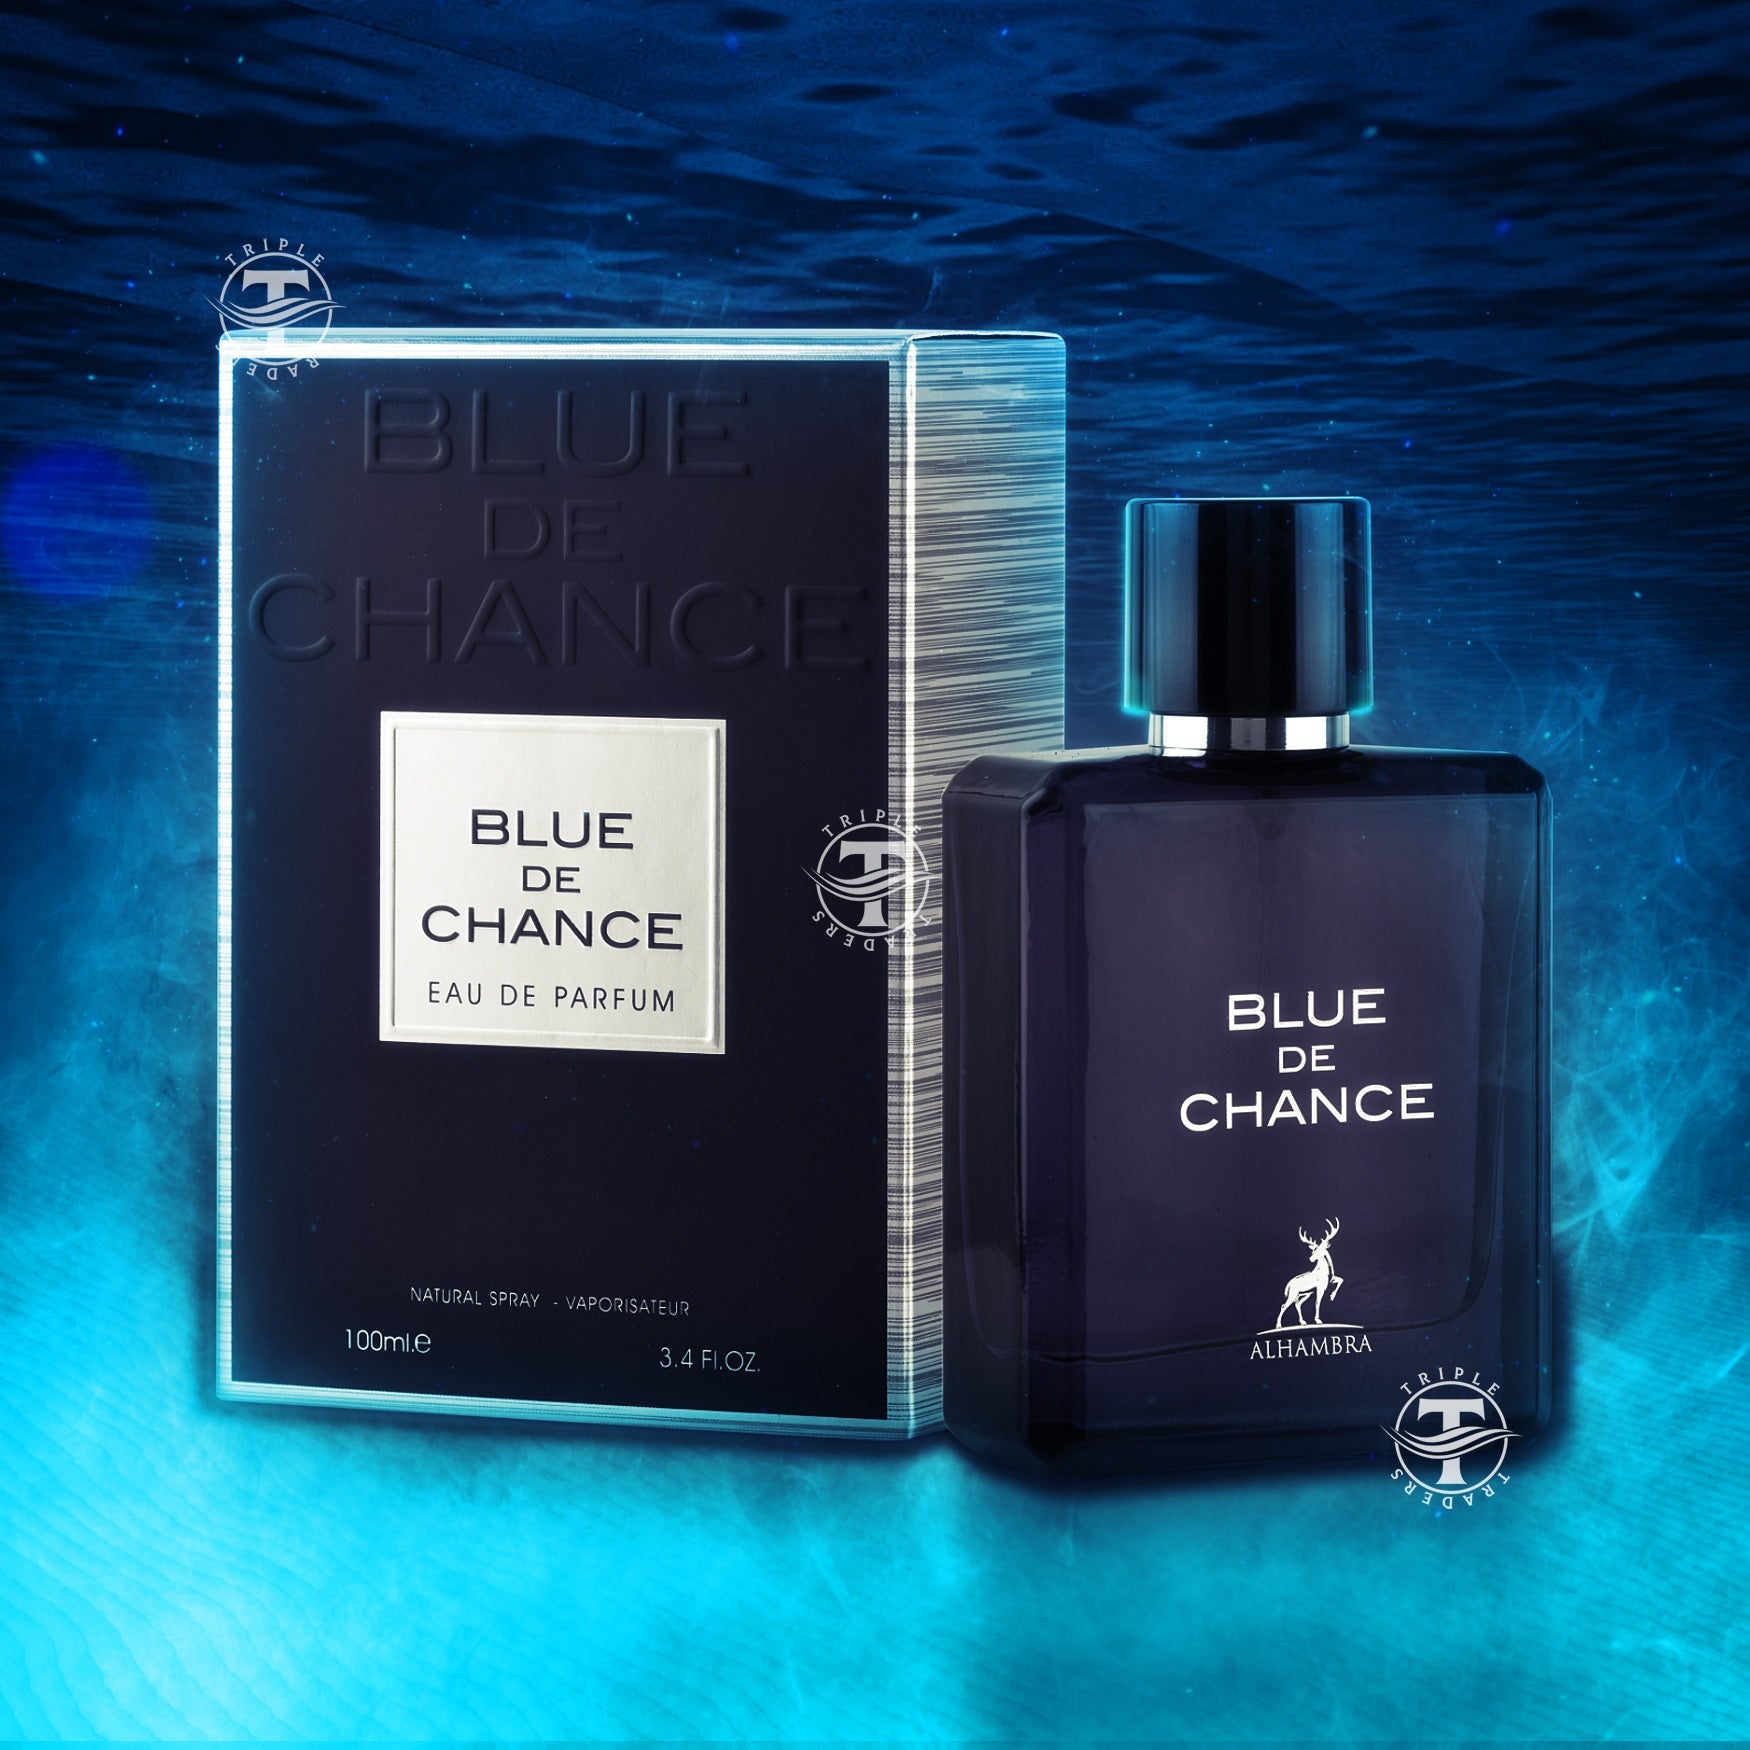 Bleu Chanel Perfume, Packaging Type: Glass Bottle